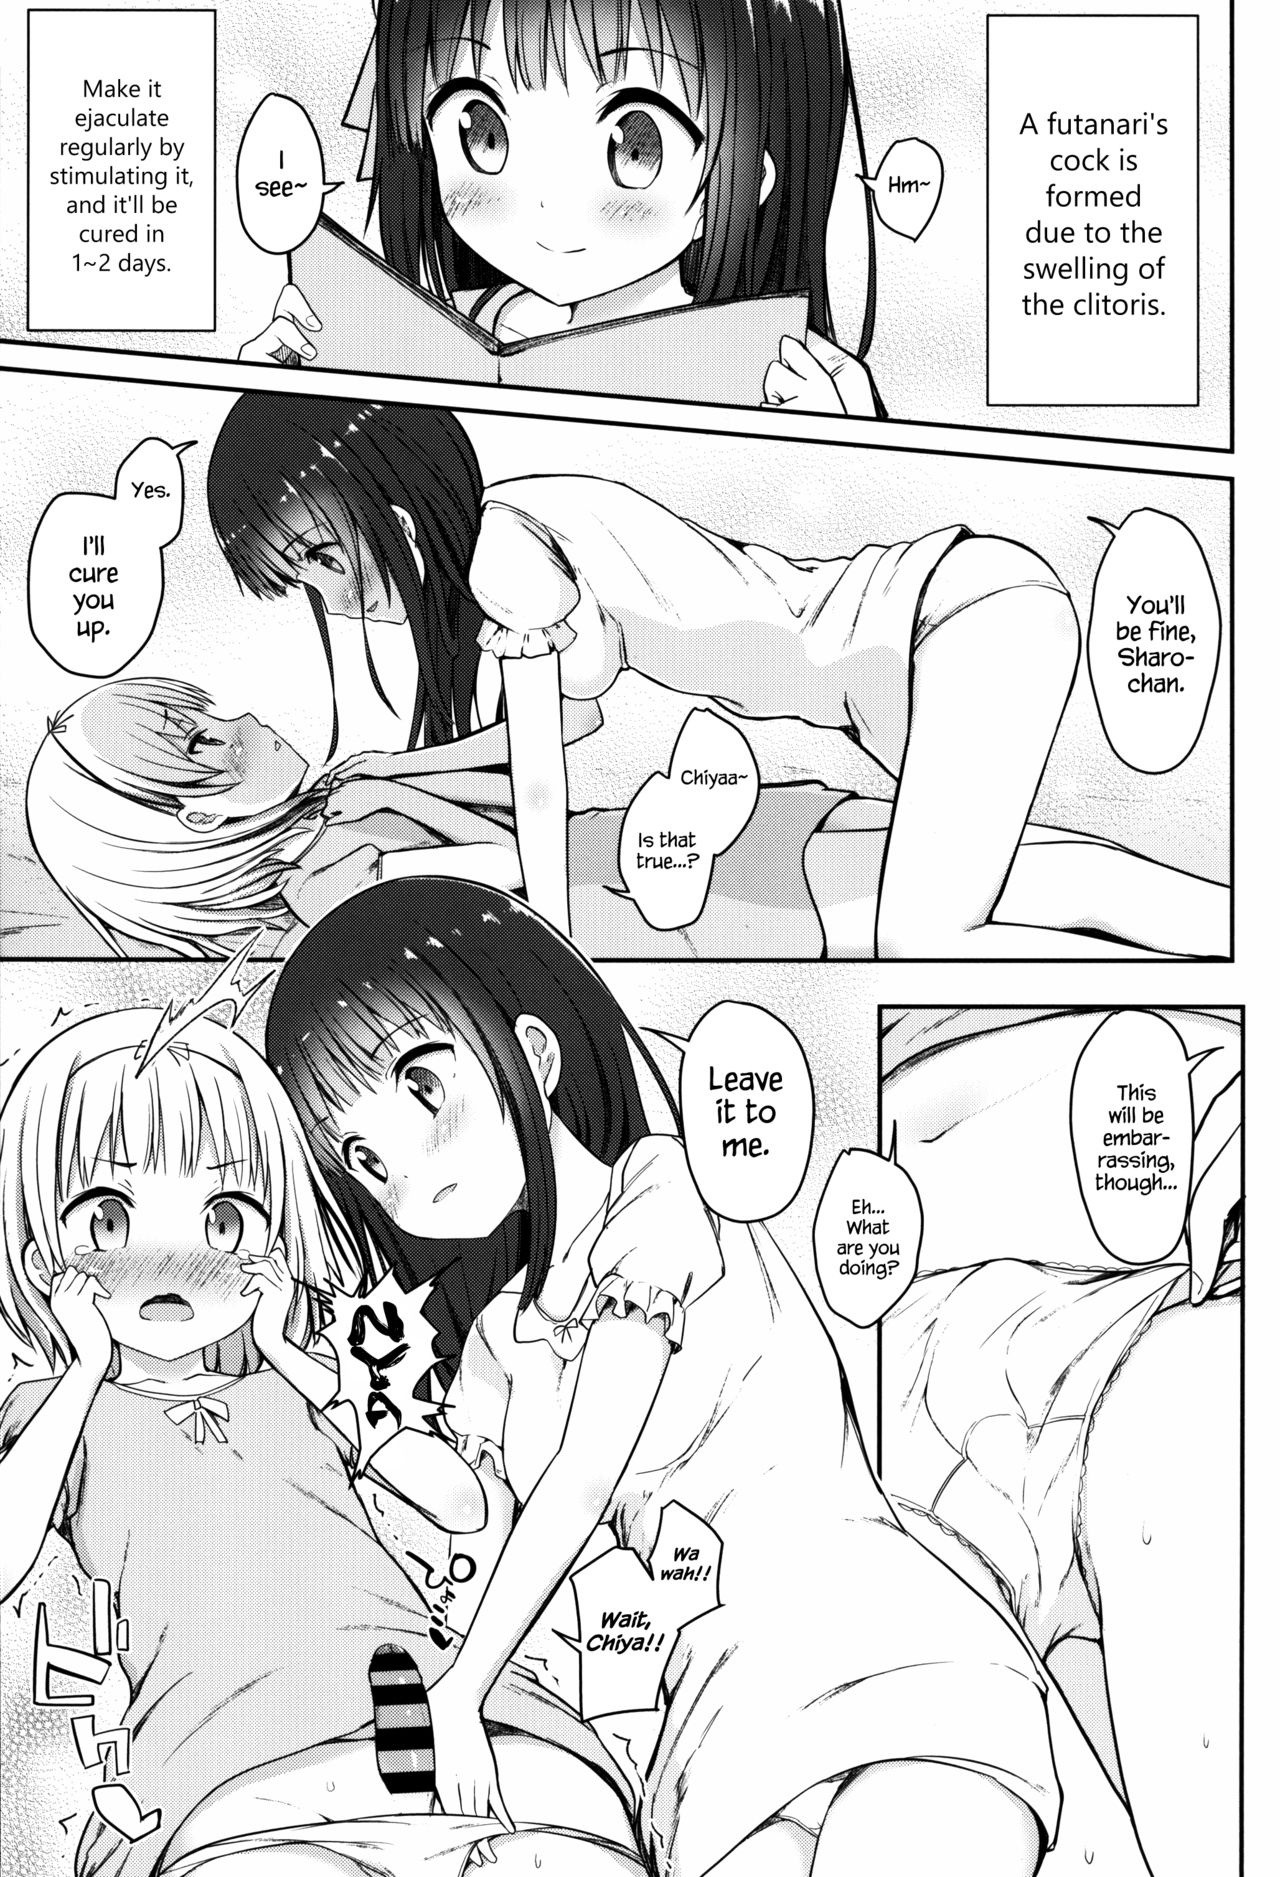 Best Friend Sex hentai manga picture 4